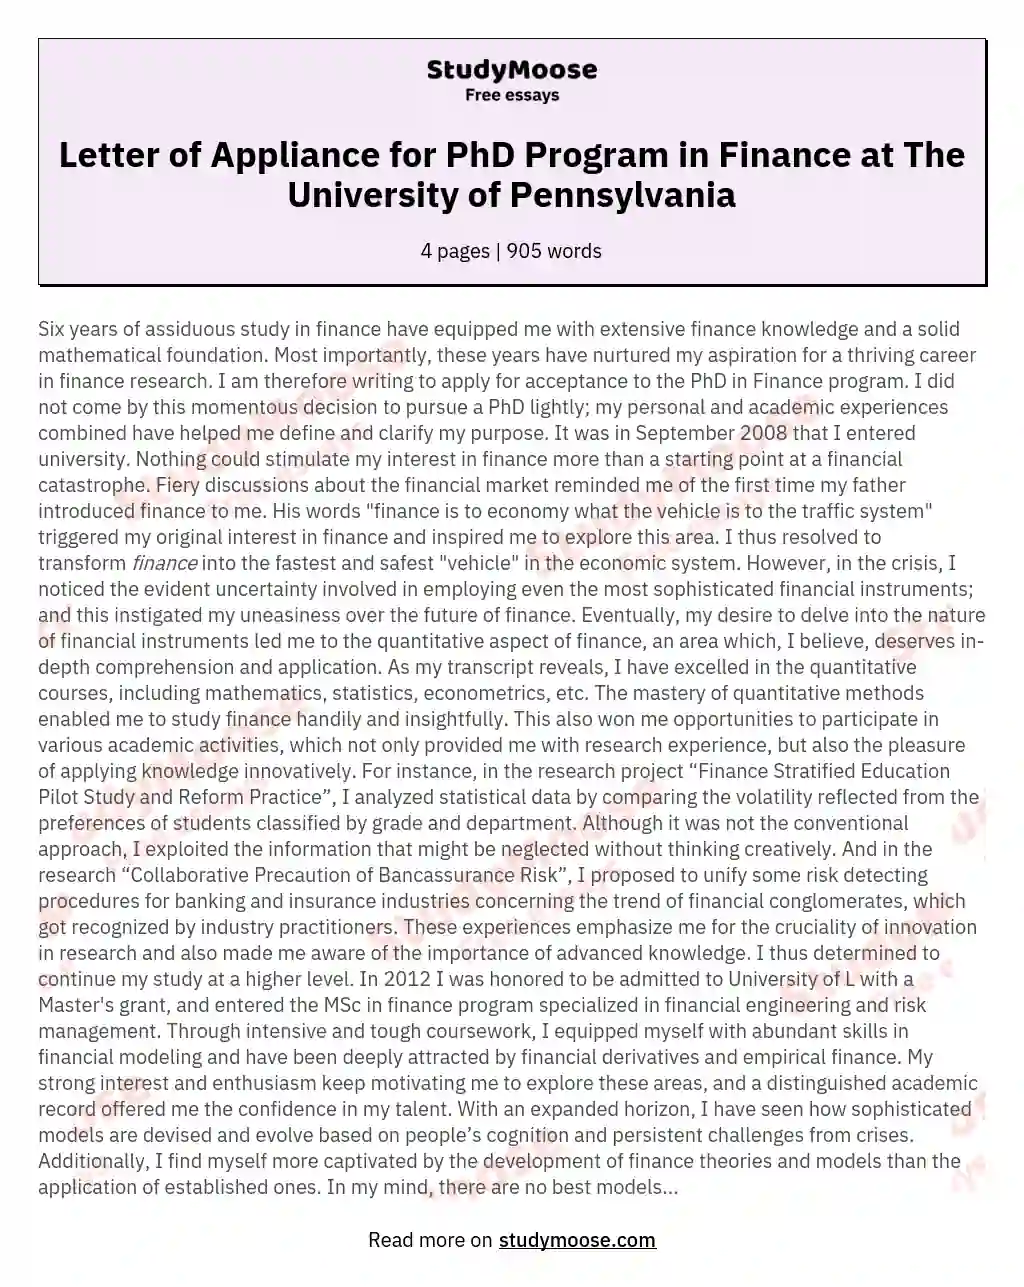 Letter of Appliance for PhD Program in Finance at The University of Pennsylvania essay